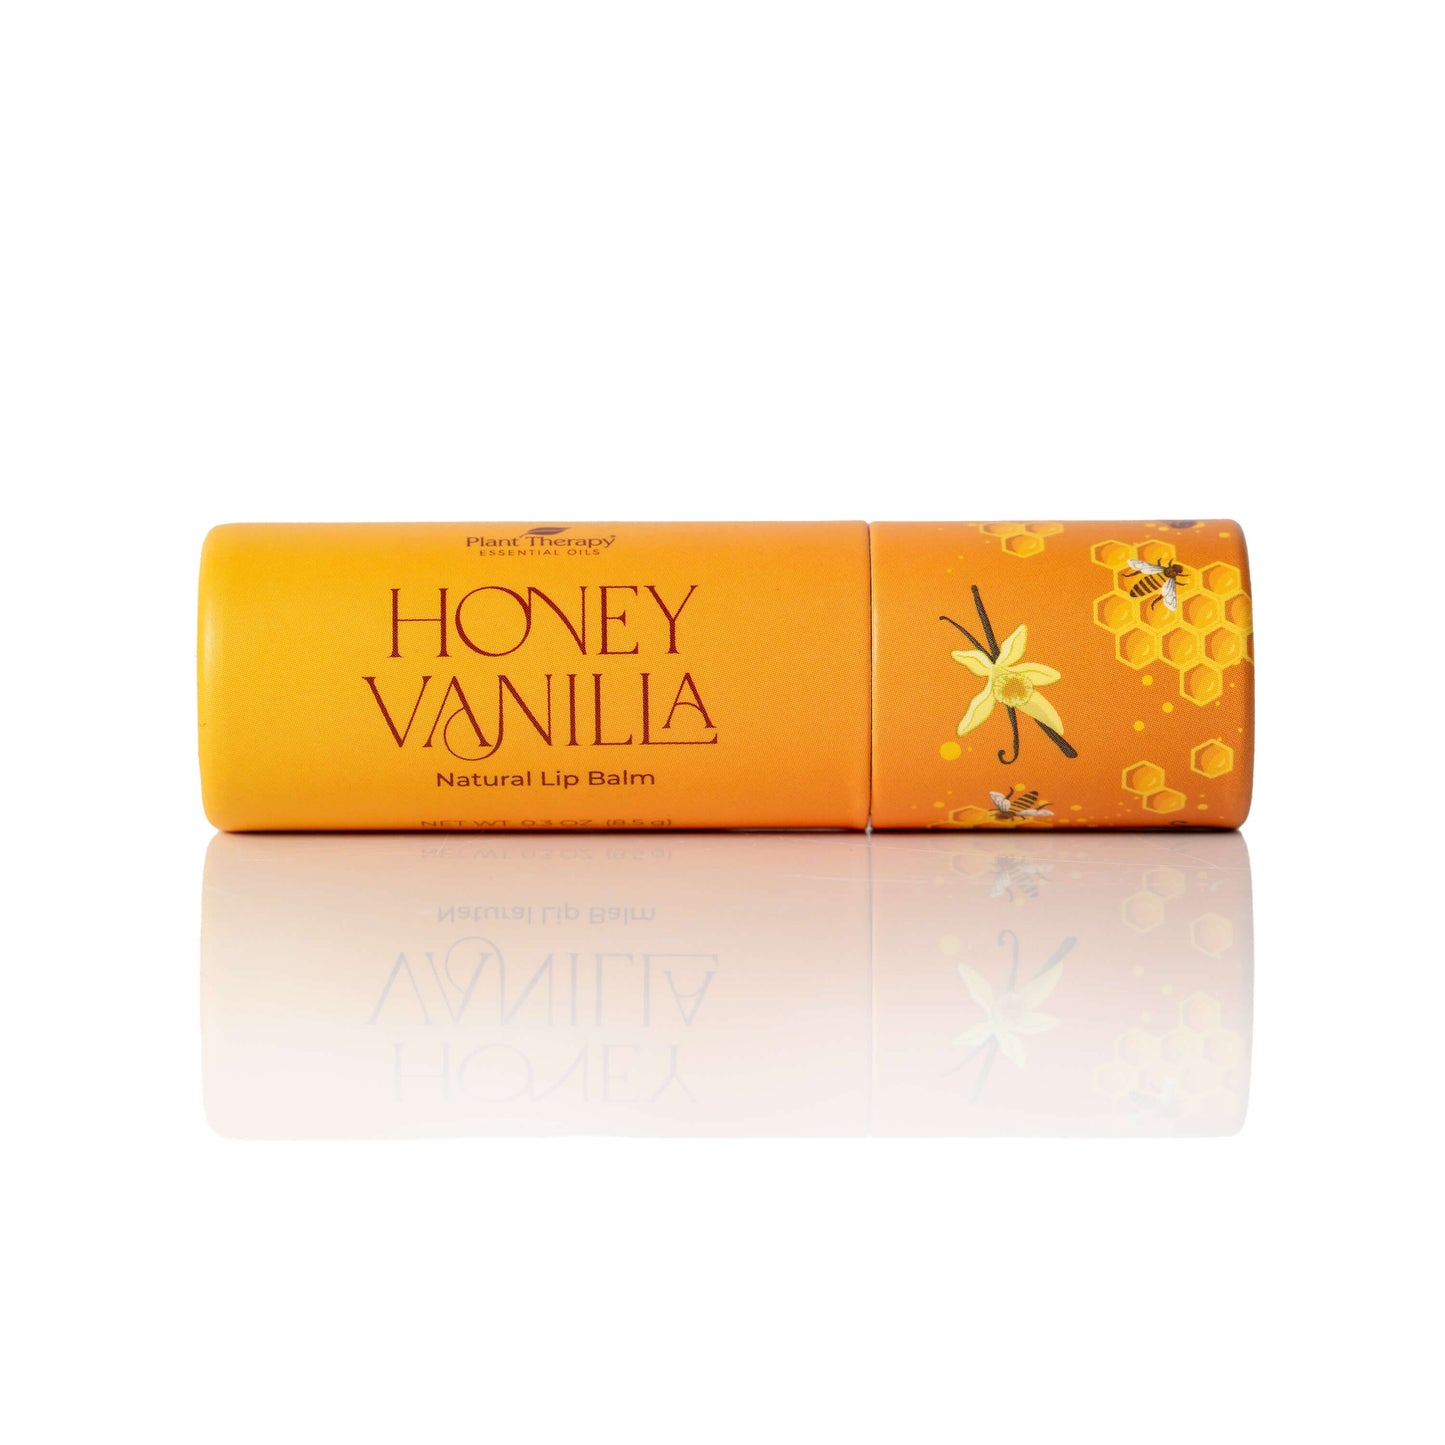 Honey Vanilla Natural Lip Balm